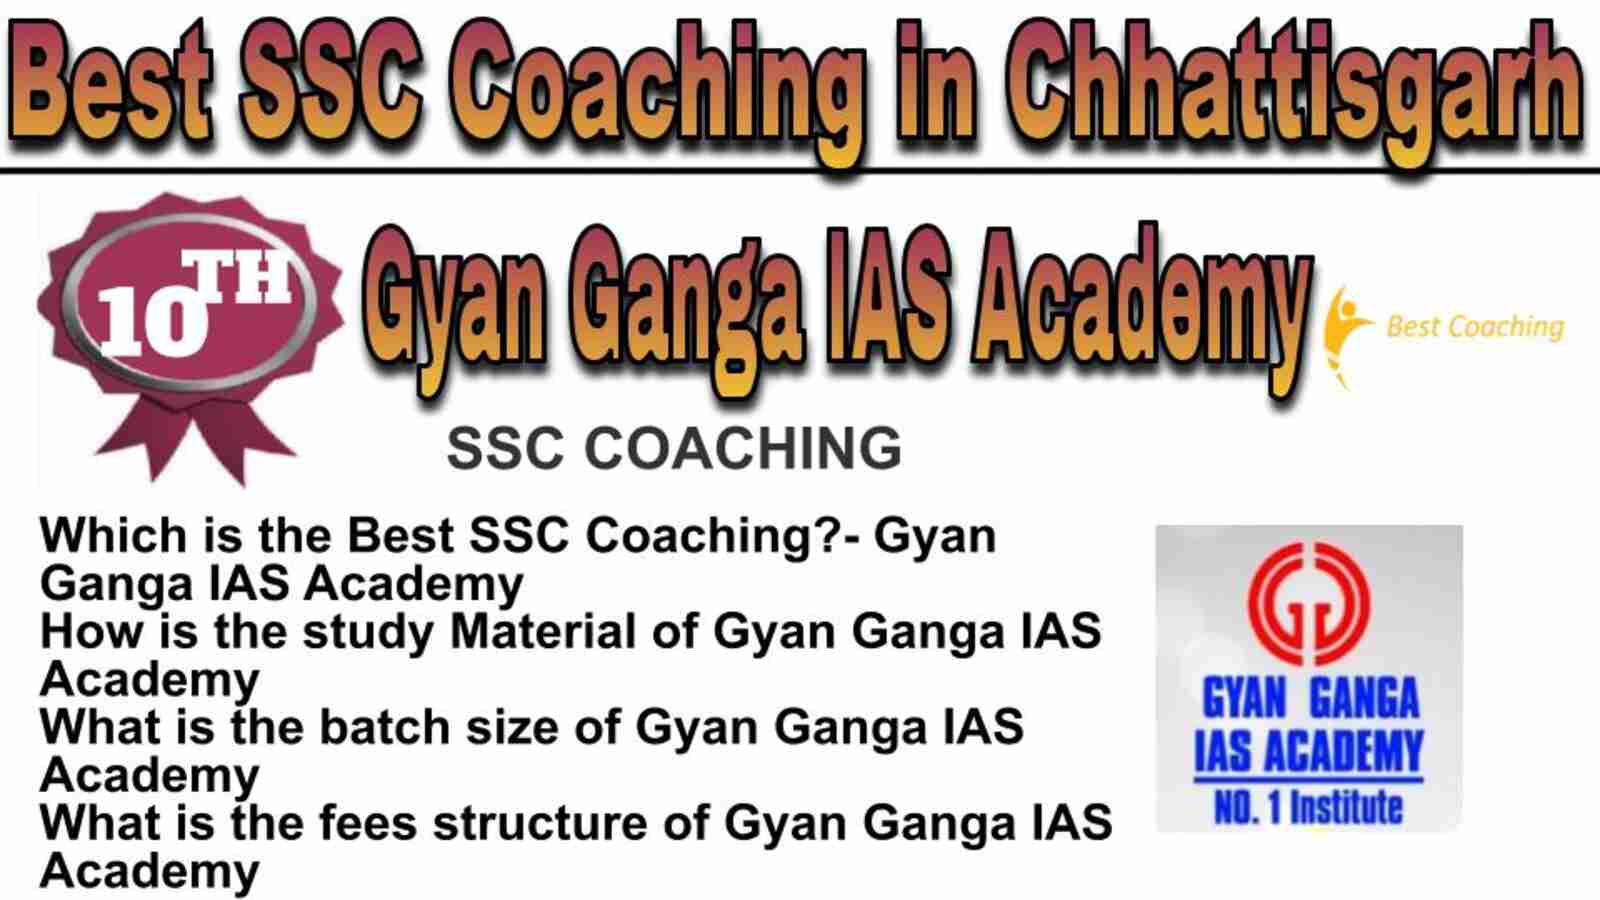 Rank 10 best SSC coaching in Chhattisgarh